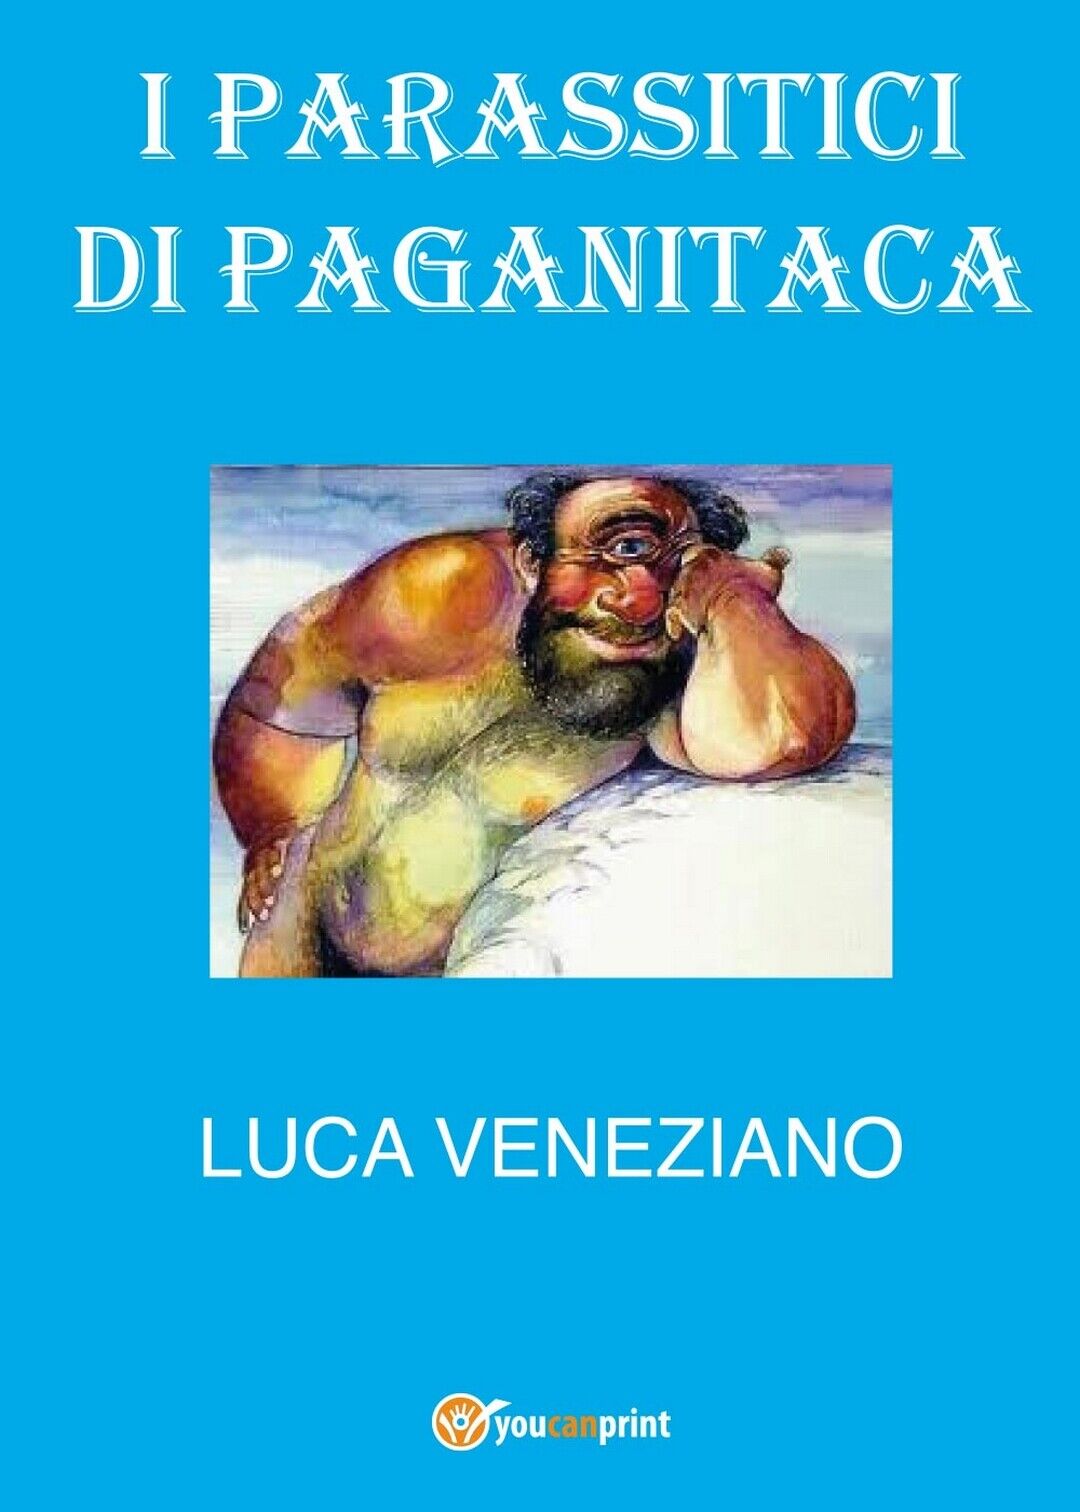 I parassitici di Paganitaca  di Luca Veneziano,  2017,  Youcanprint